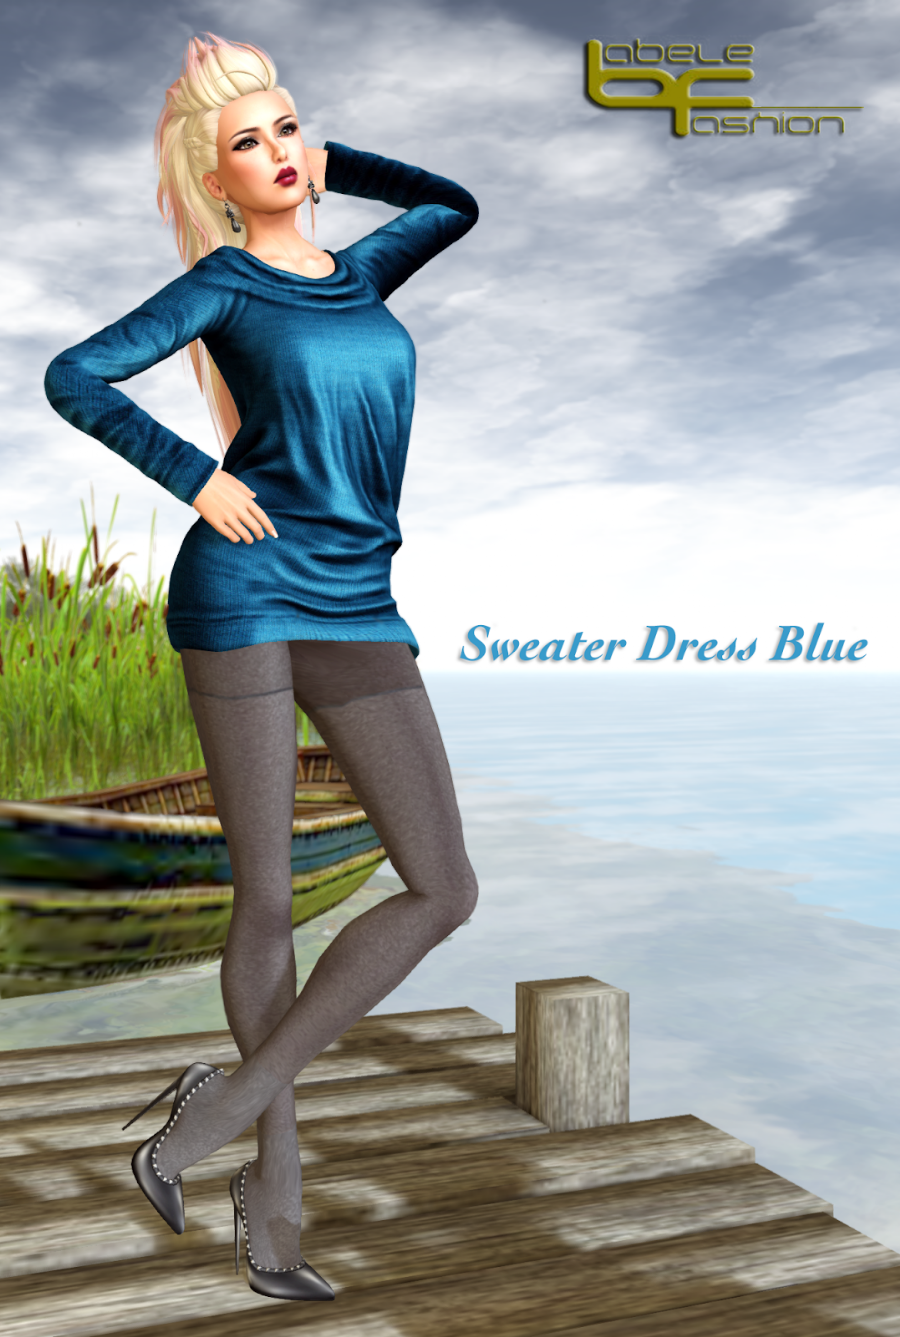 sweater dress blue promo